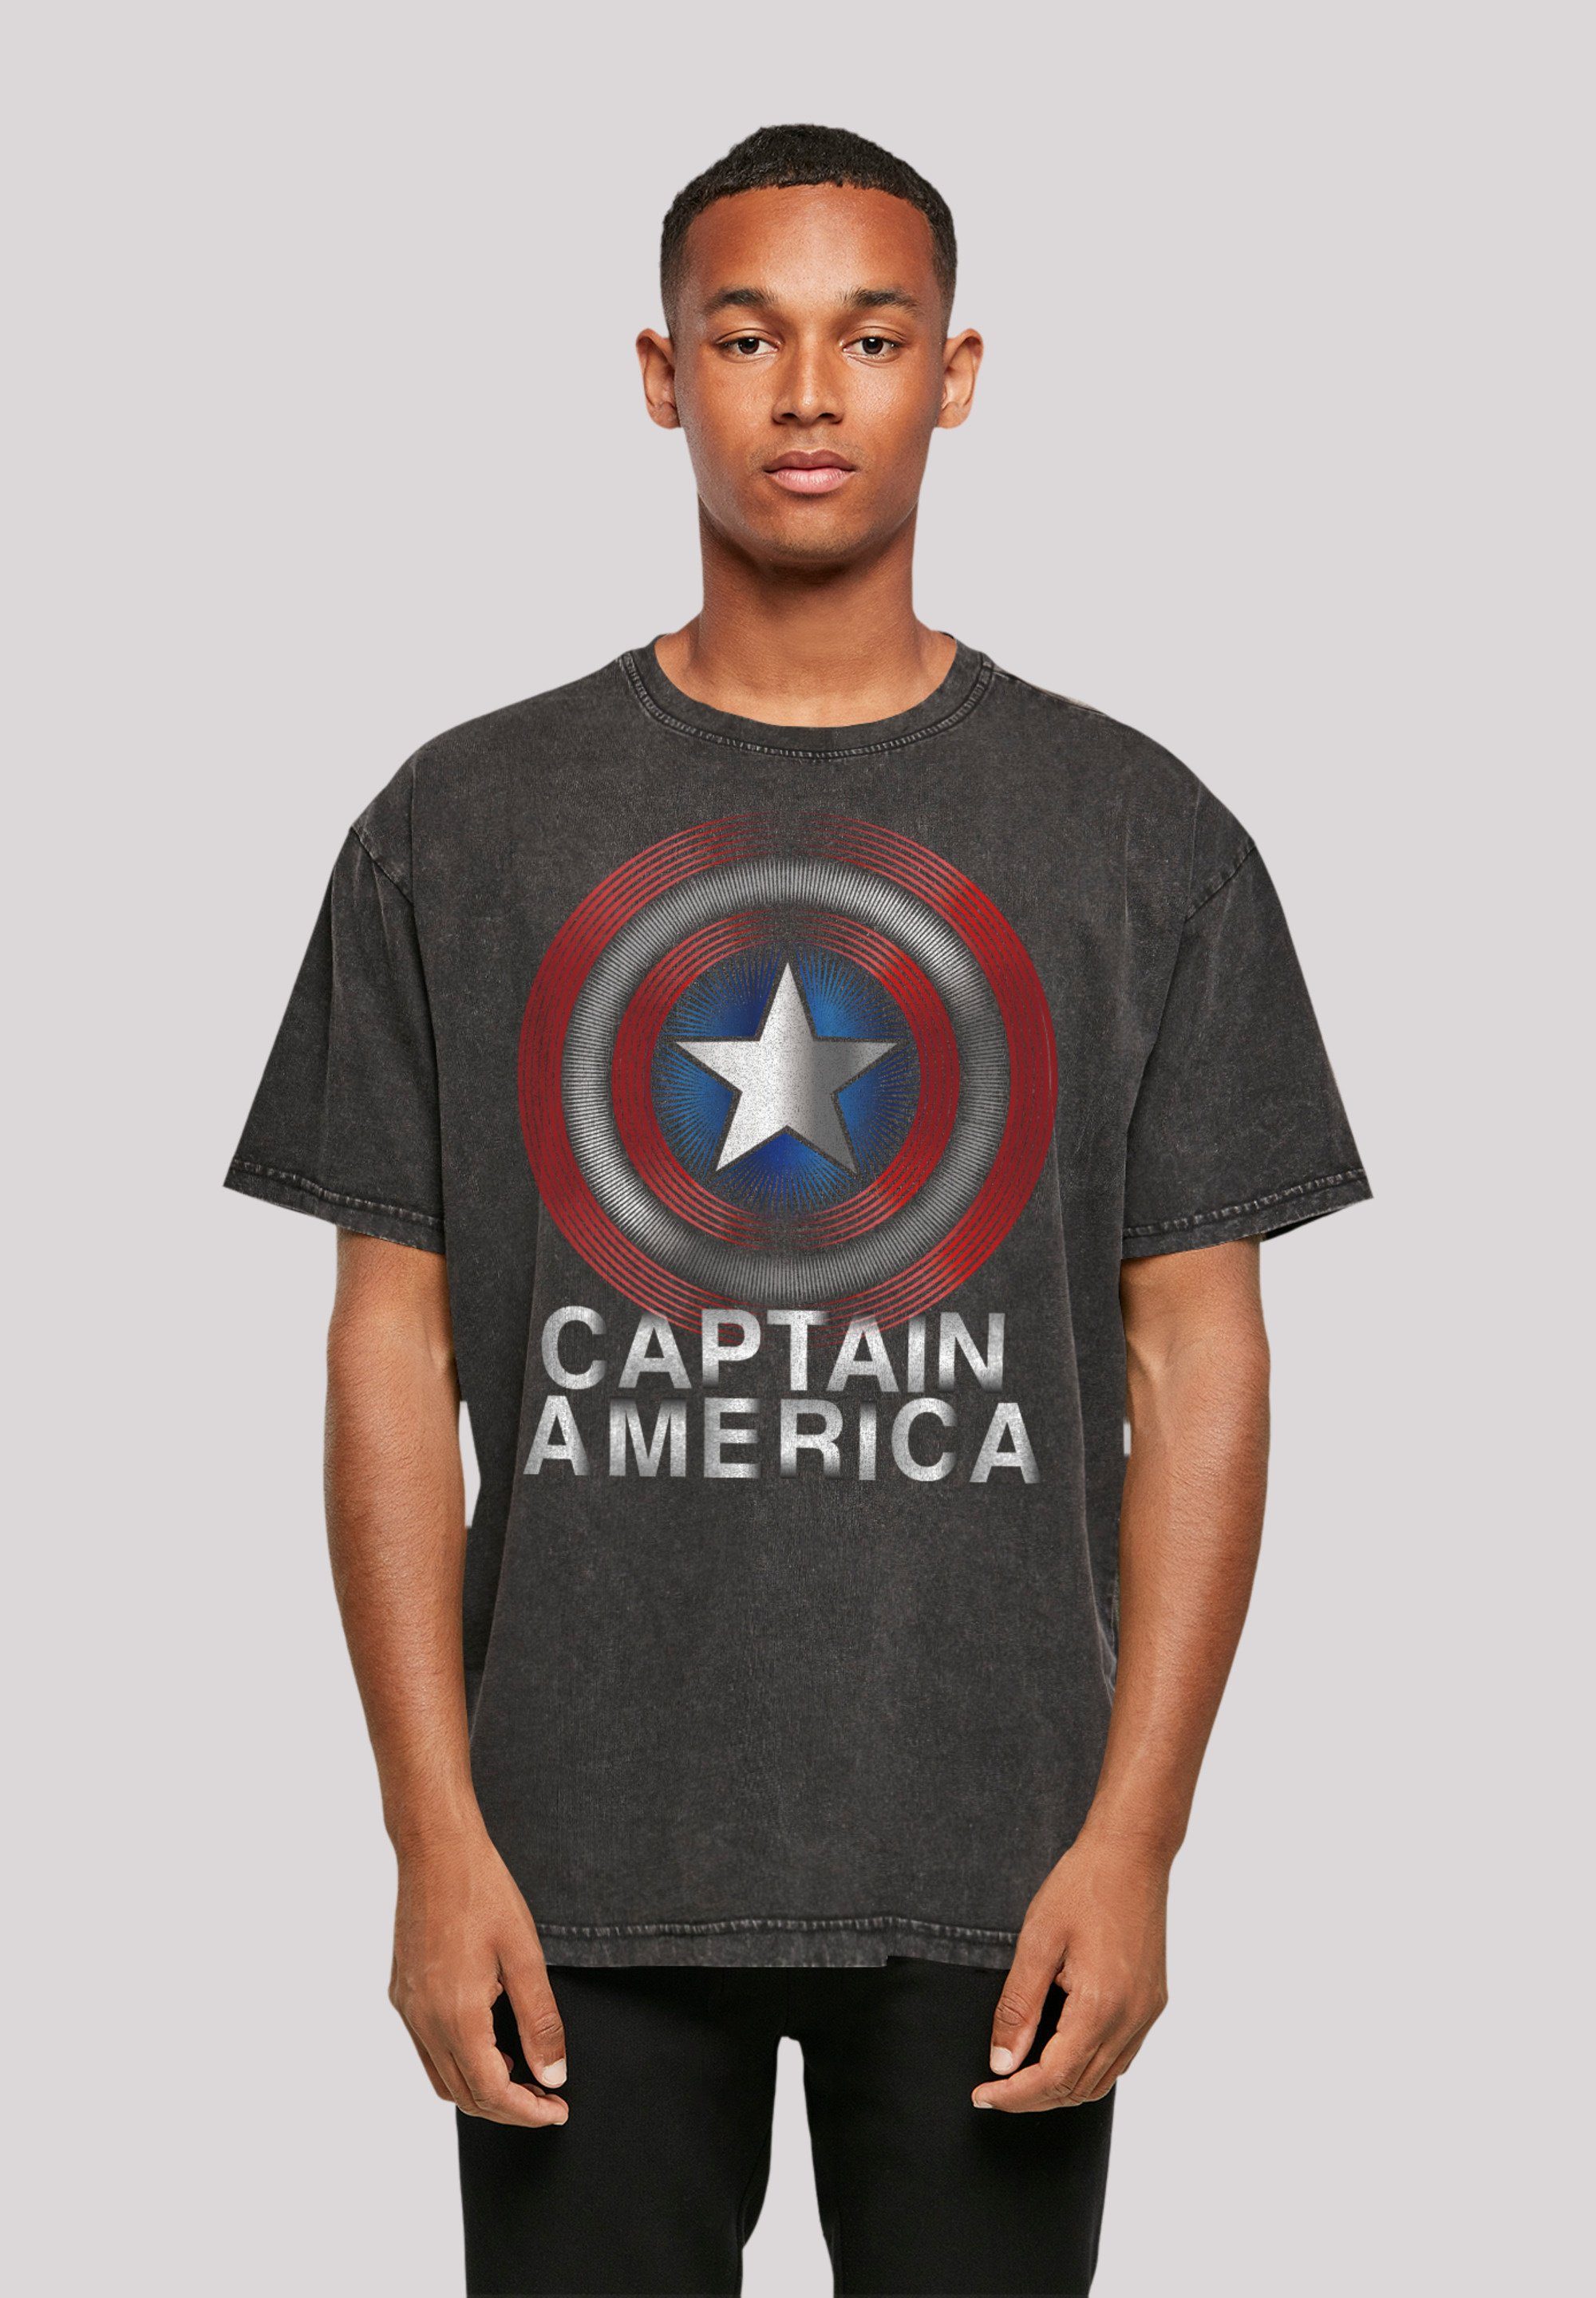 F4NT4STIC T-Shirt Marvel Captain America Flash Logo Premium Qualität,  Offiziell lizenziertes Marvel T-Shirt